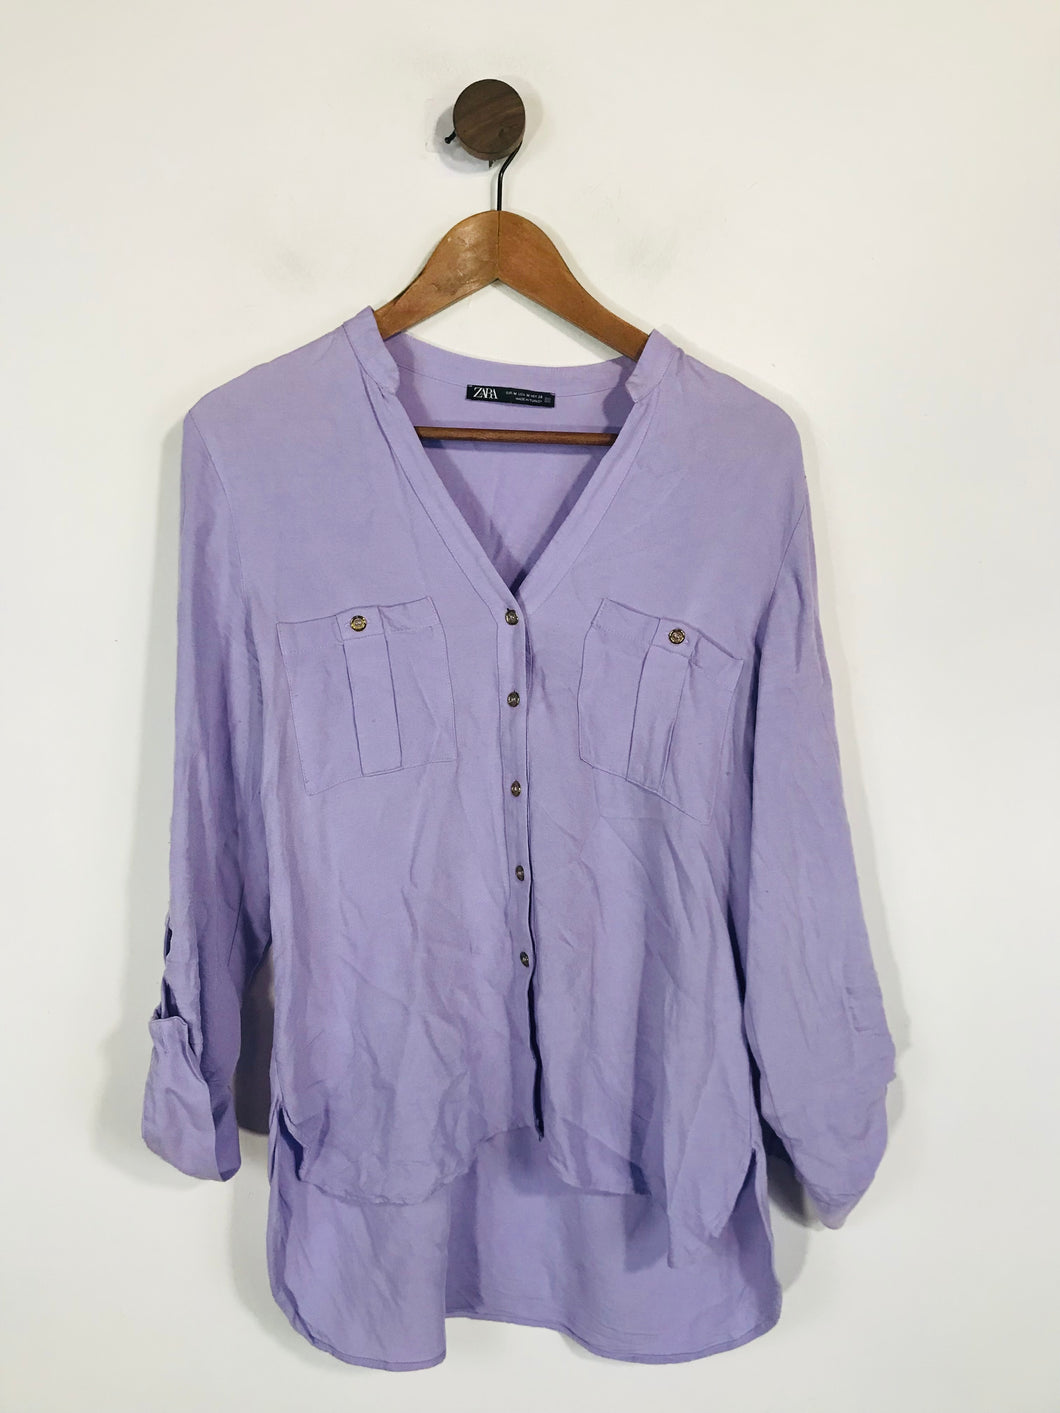 Zara Women's V-Neck Button-Up Shirt | M UK10-12 | Purple